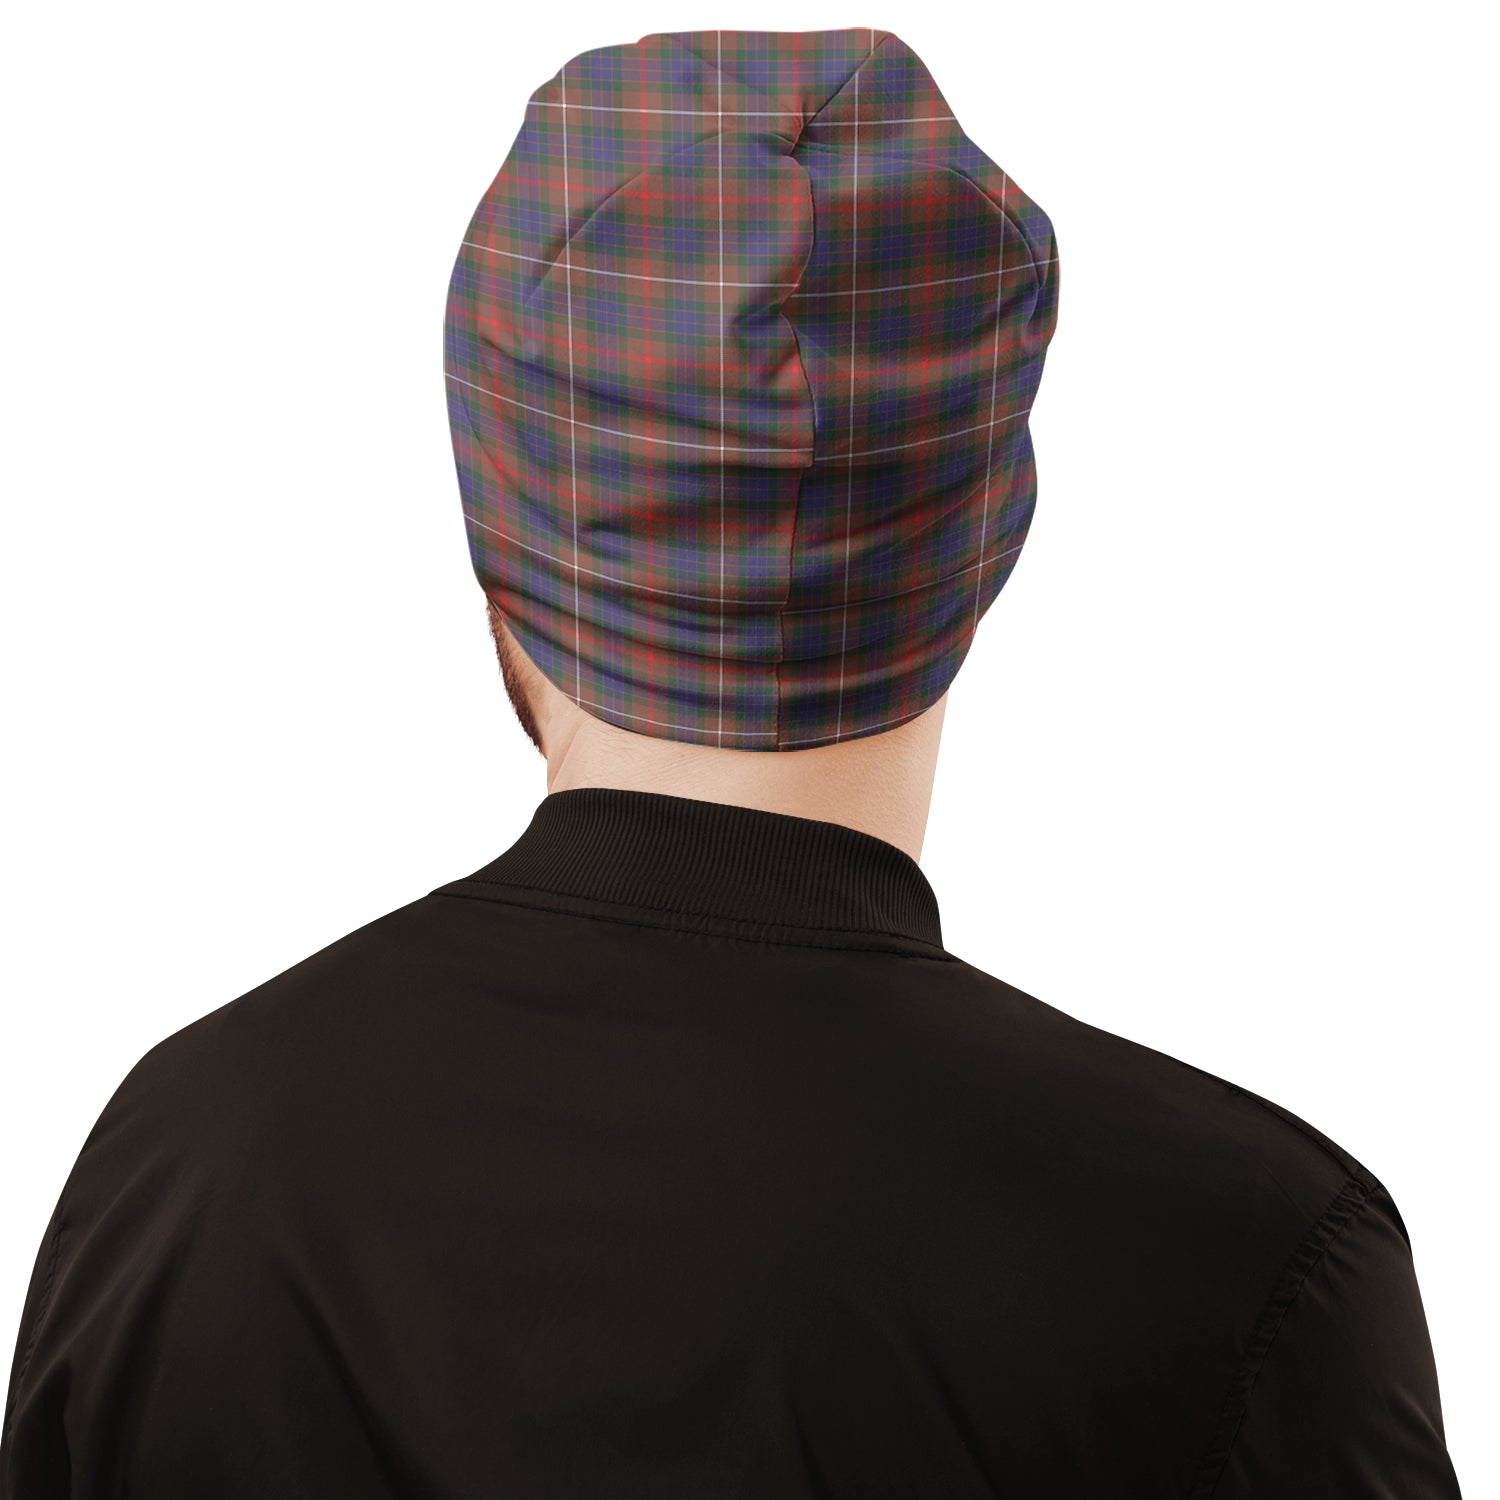 fraser-hunting-modern-tartan-beanies-hat